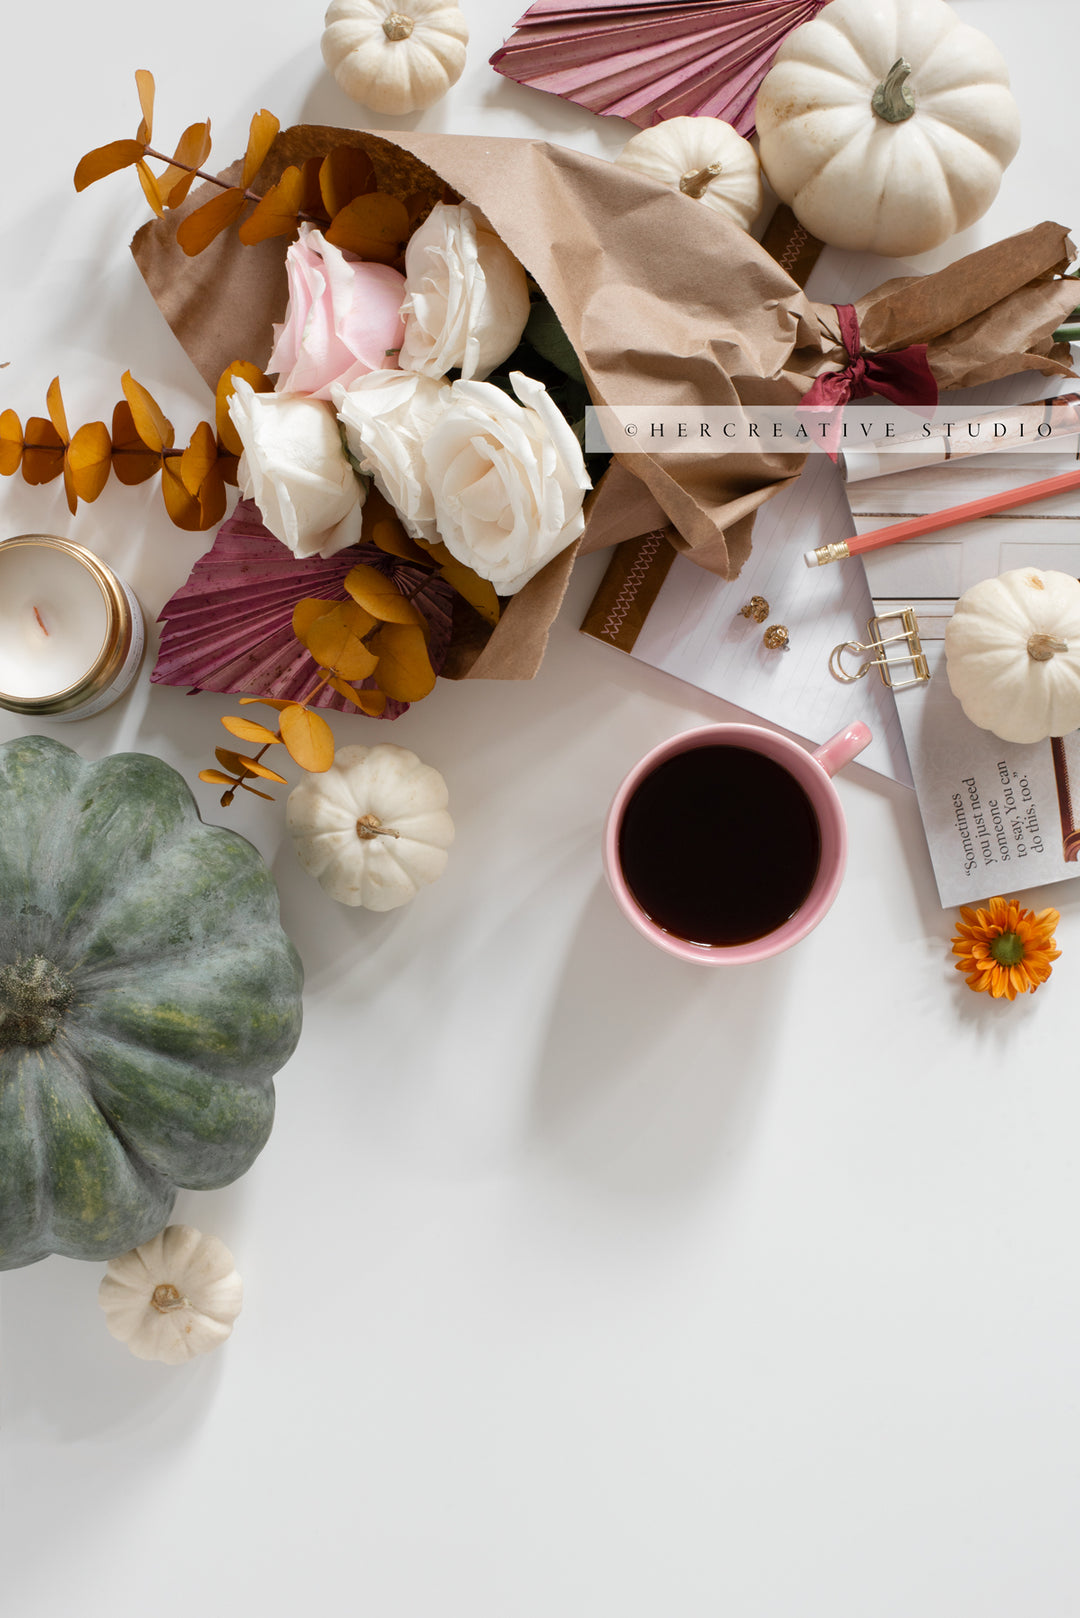 Coffee, Fall Pumpkins & Bouquet of Flowers. Digital Stock Image.